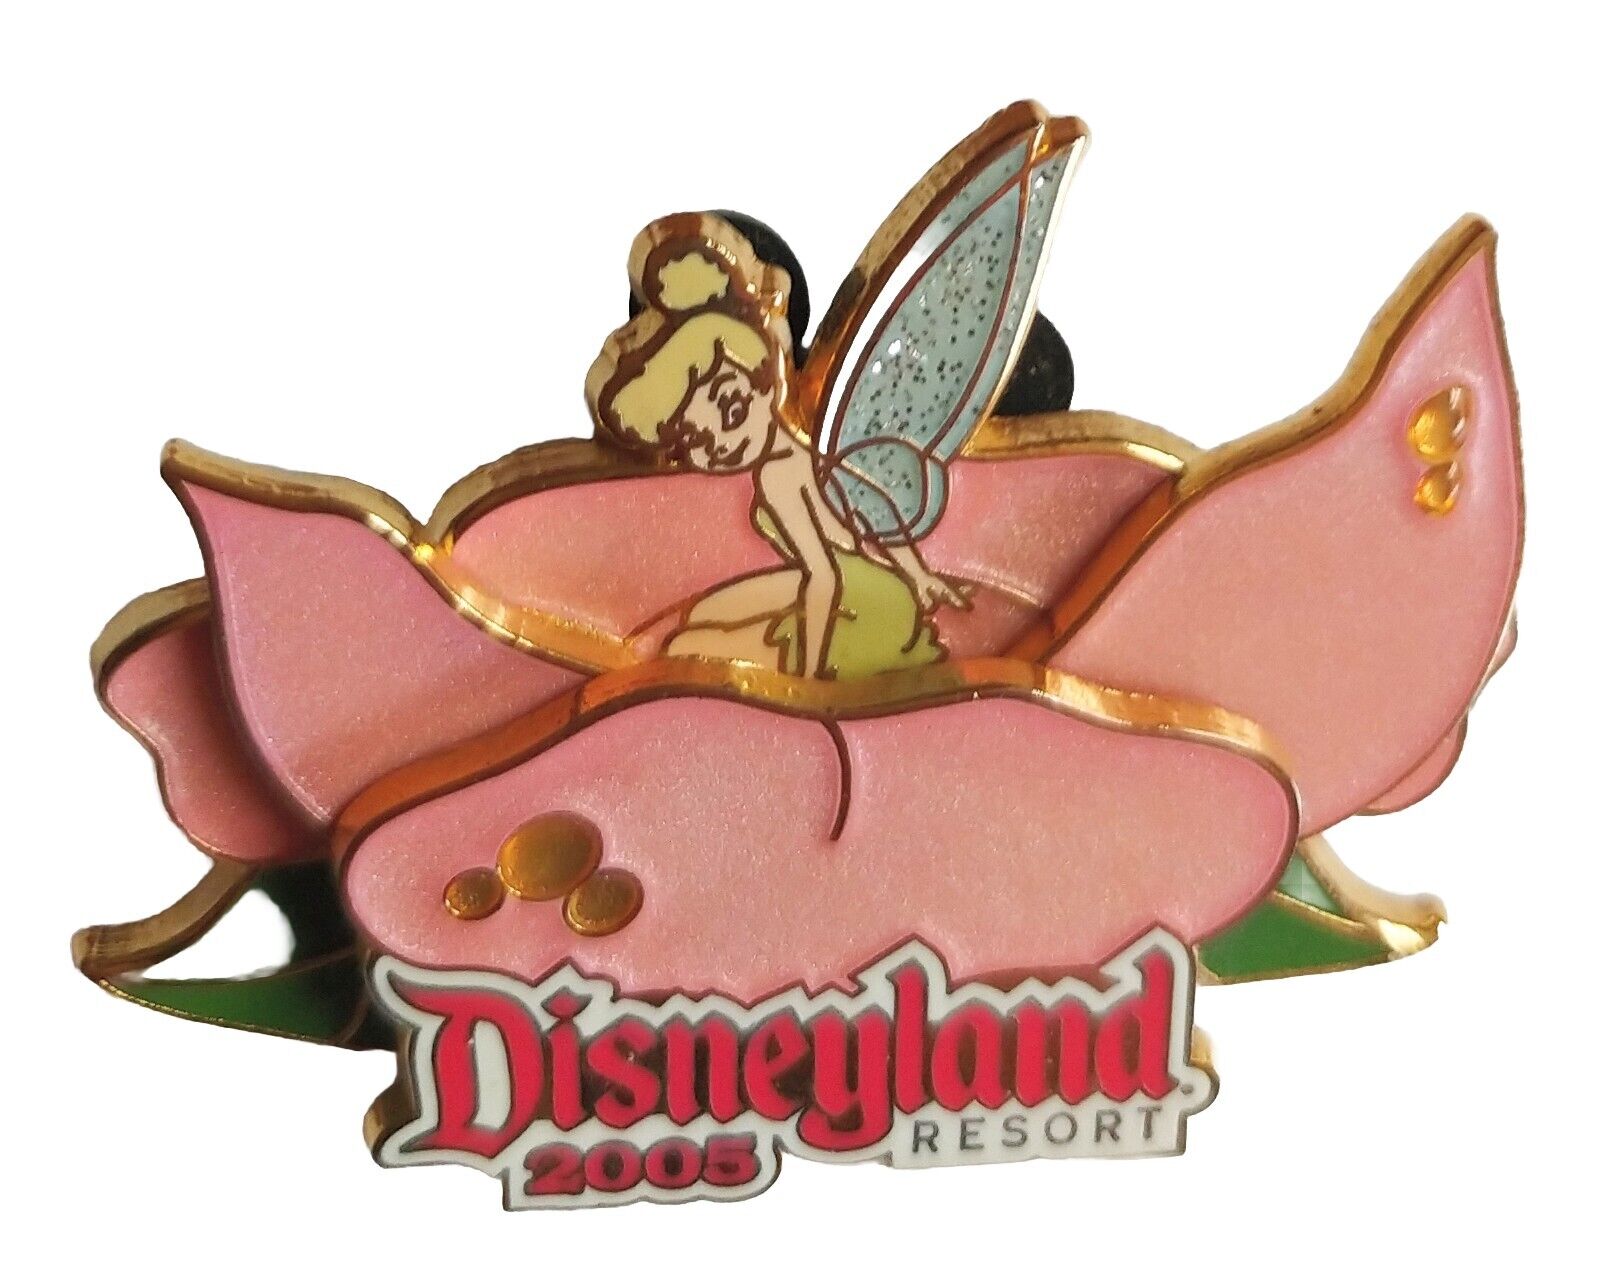 Disneyland Resort 2005 Tinker Bell In Flower, Hinged LE Pin